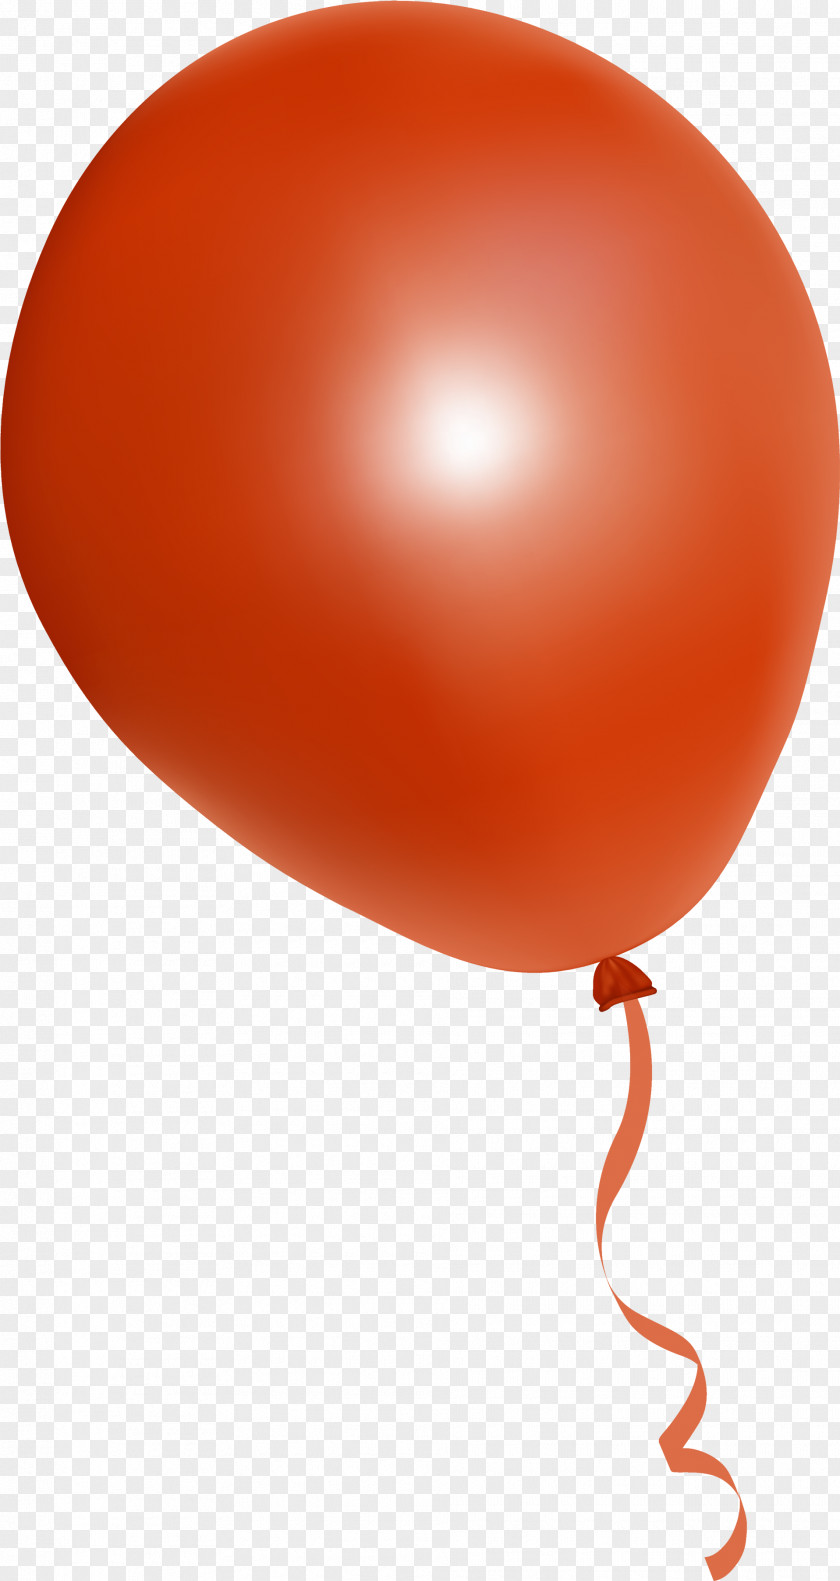 Transparent Copyright Watermark Clipart Balloon Fruit PNG